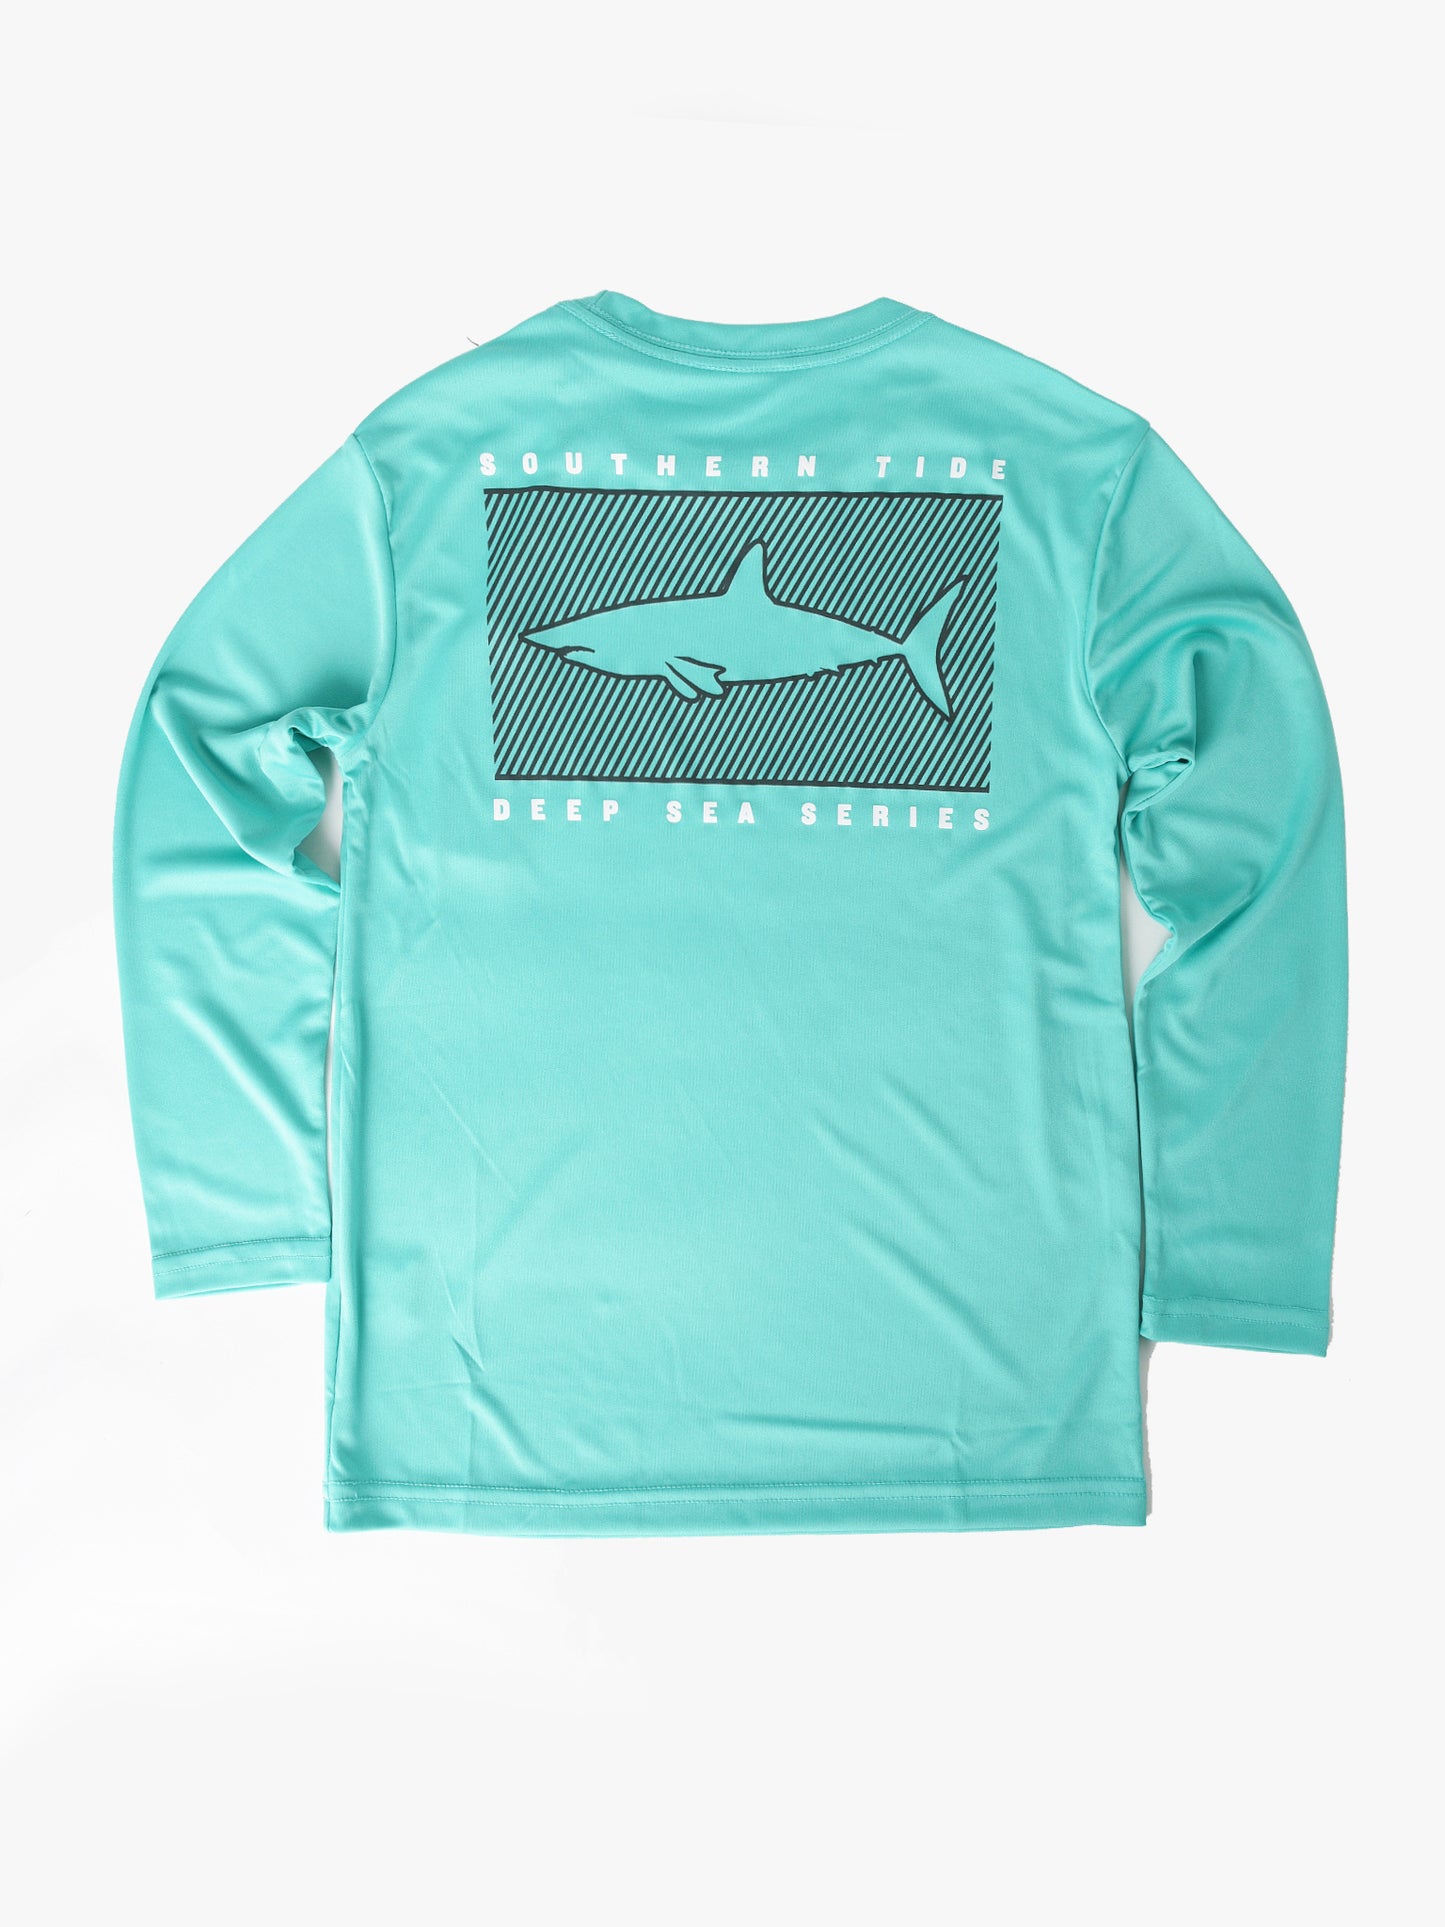 Southern Tide Boys' Performance Deep Sea Series Shark T-Shirt